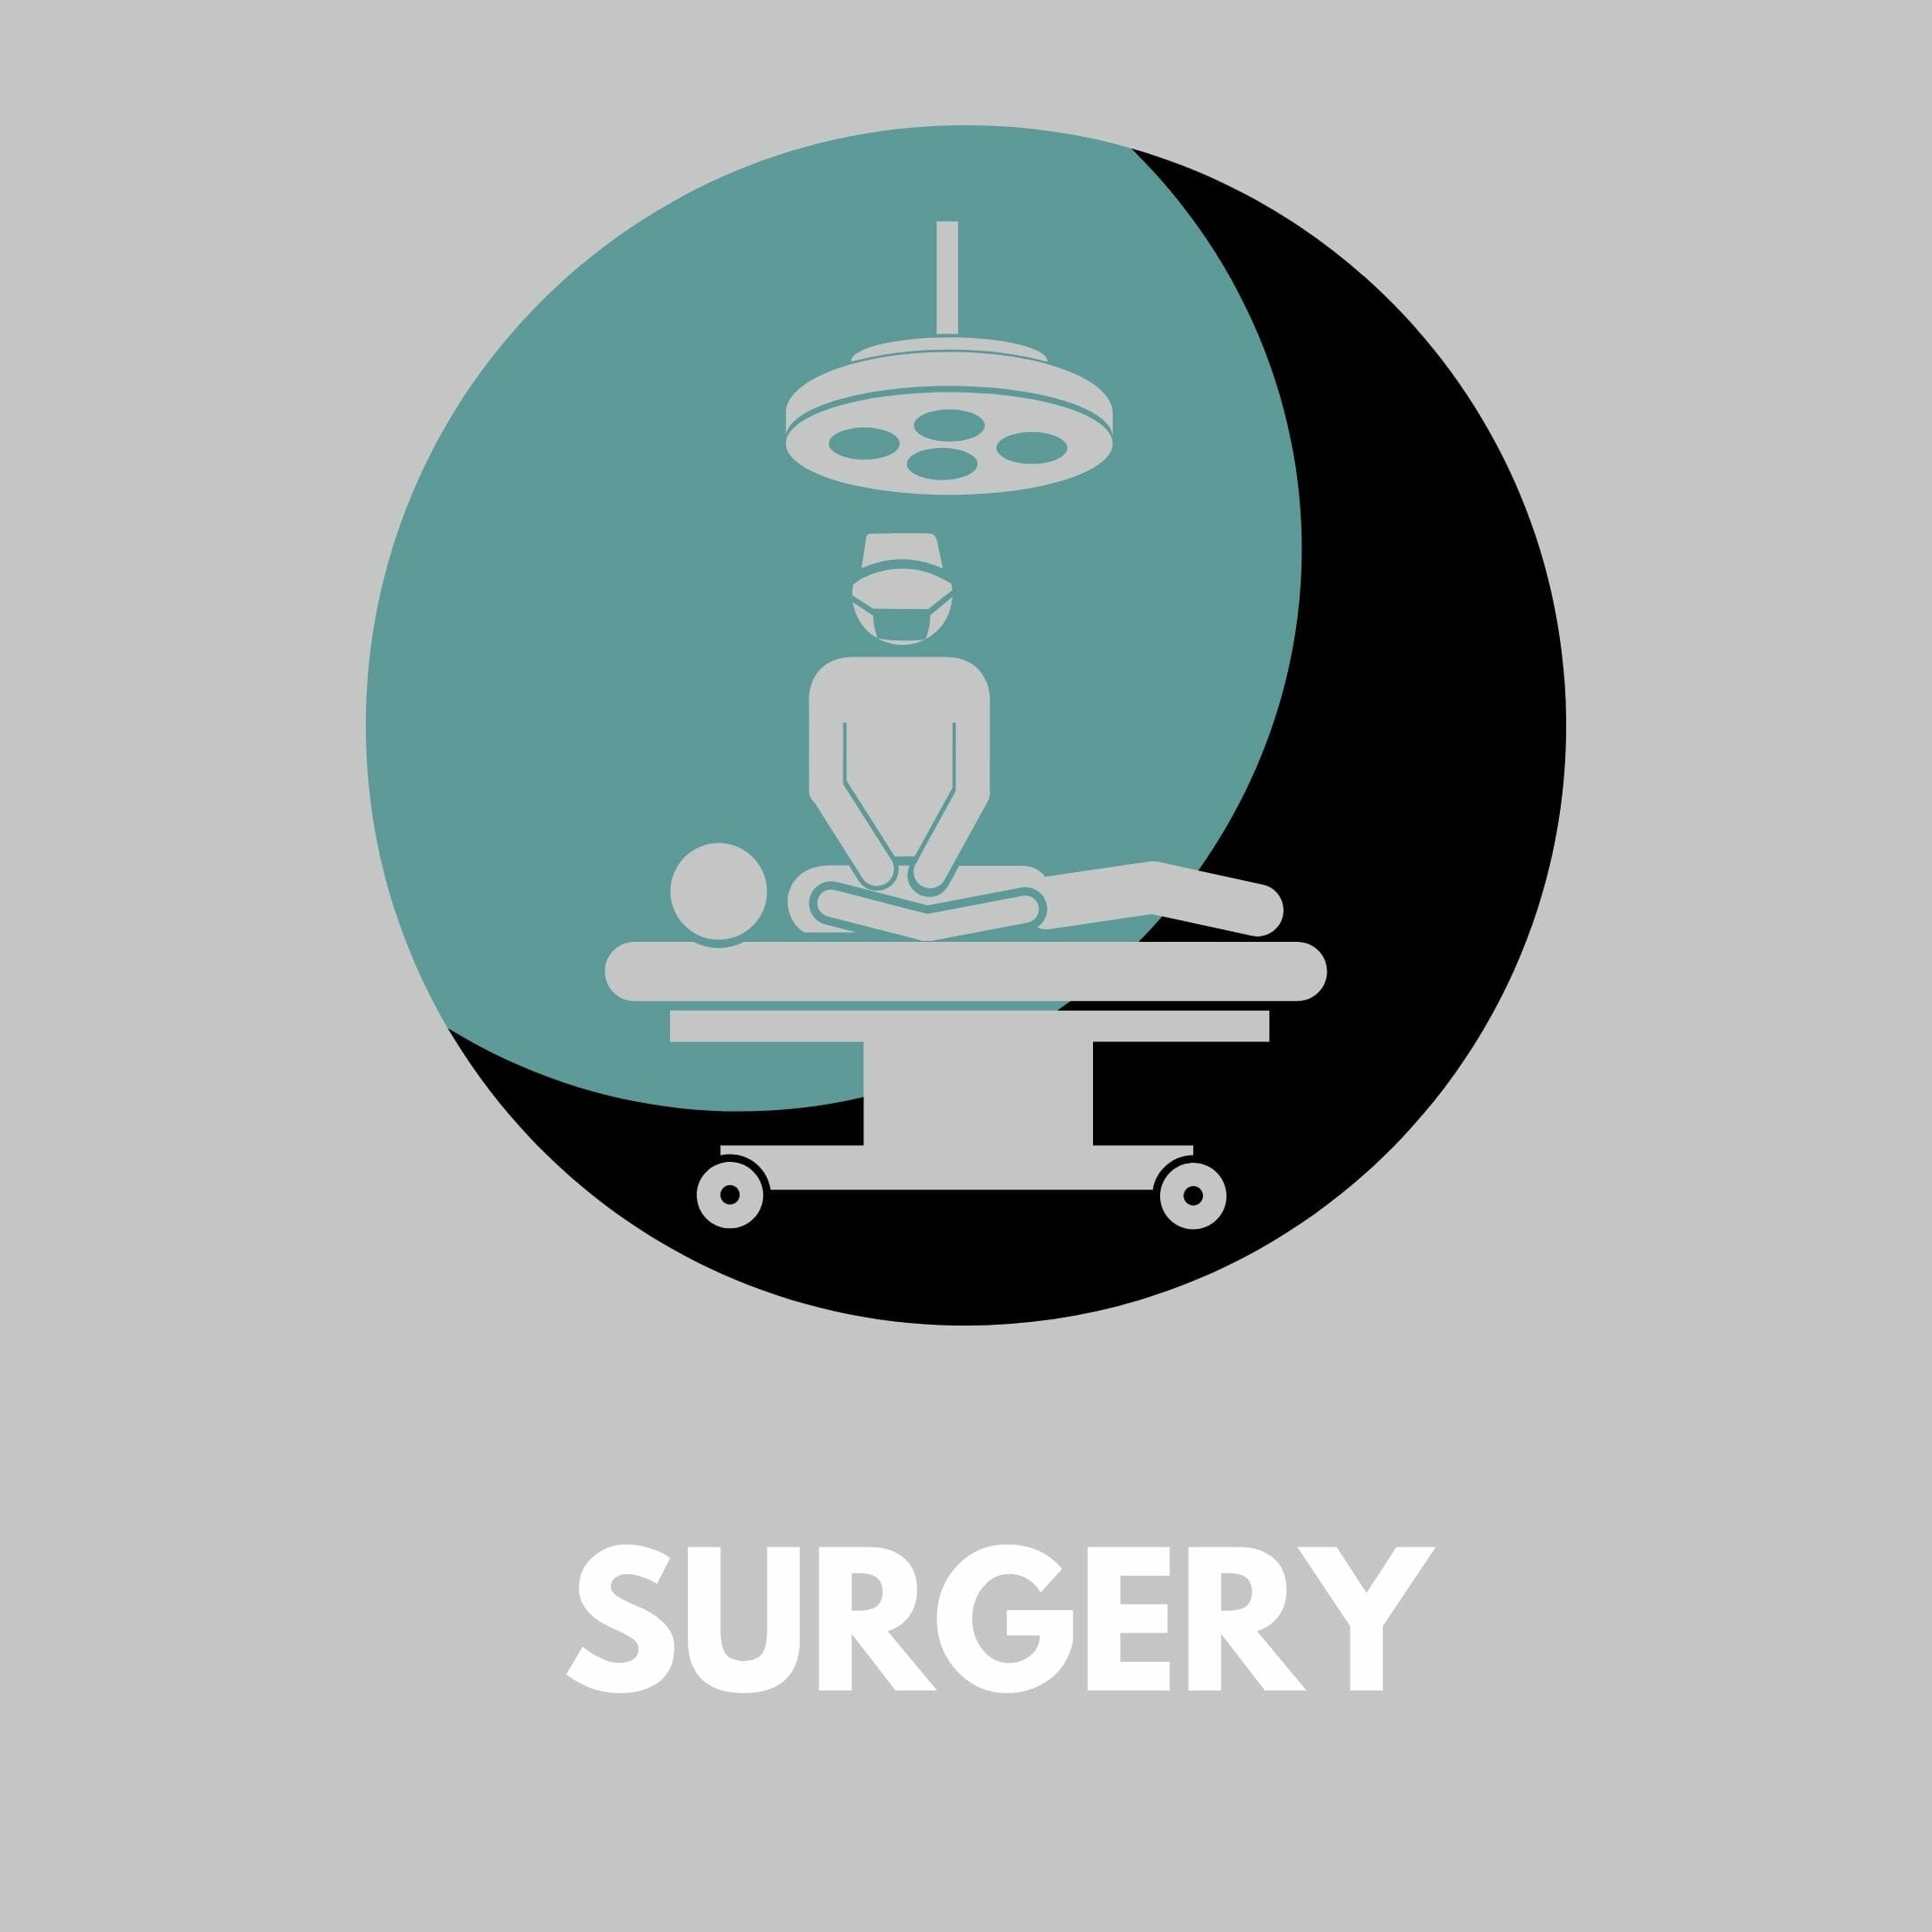 surgery